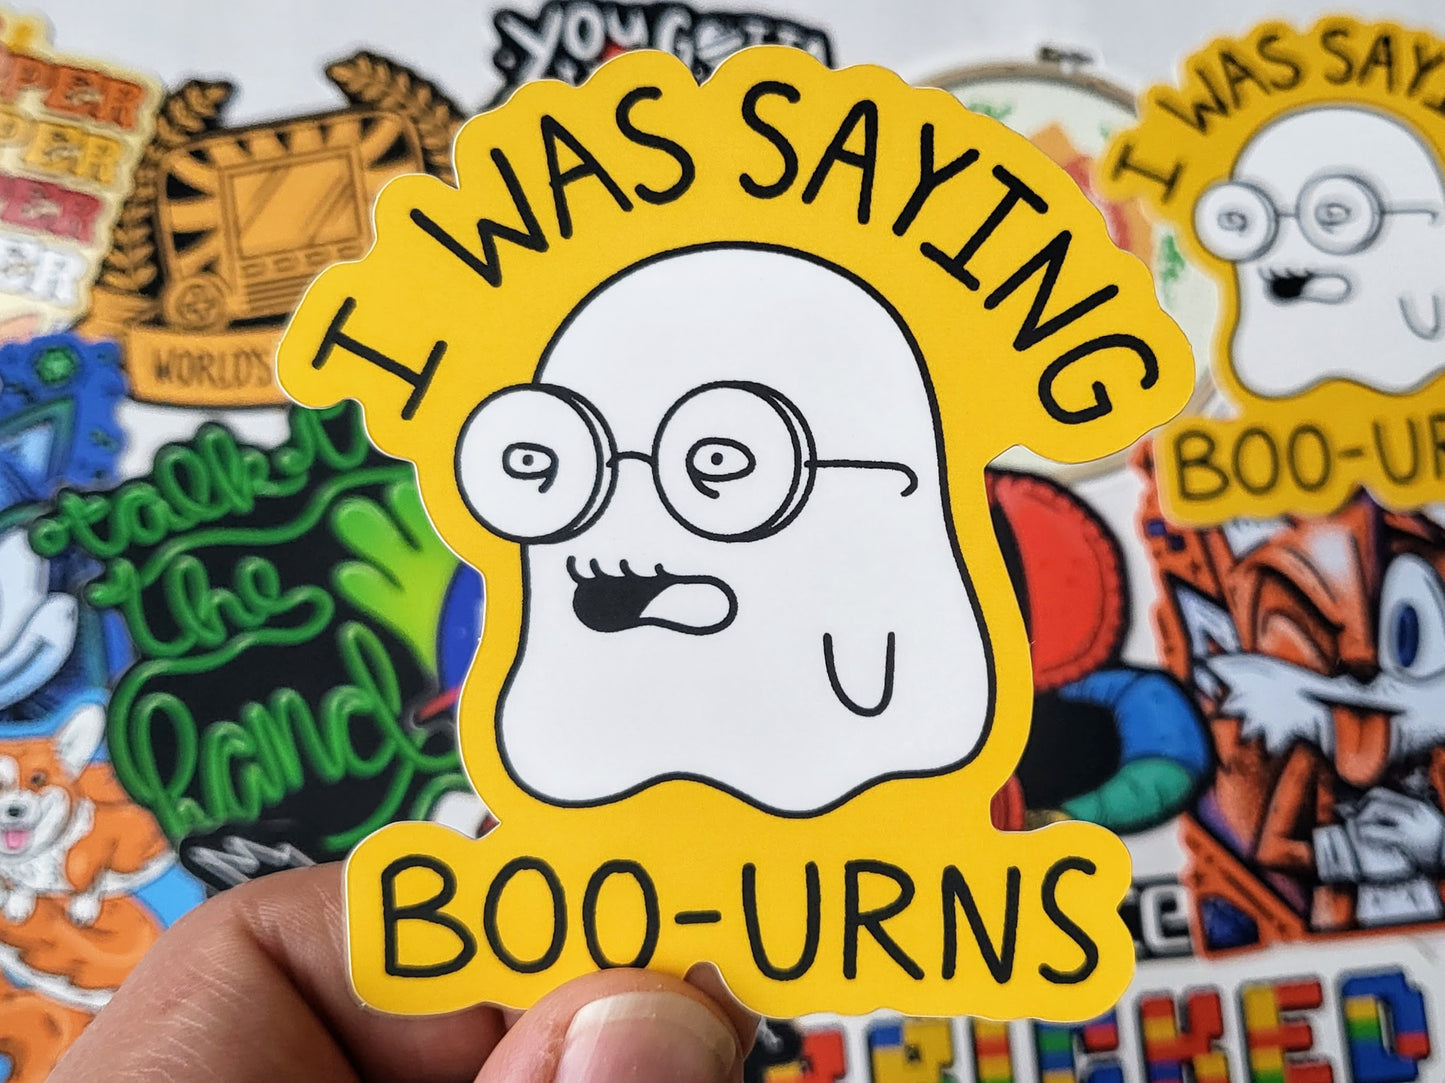 Boo-Urns funny 90s Nostalgia Vinyl Sticker